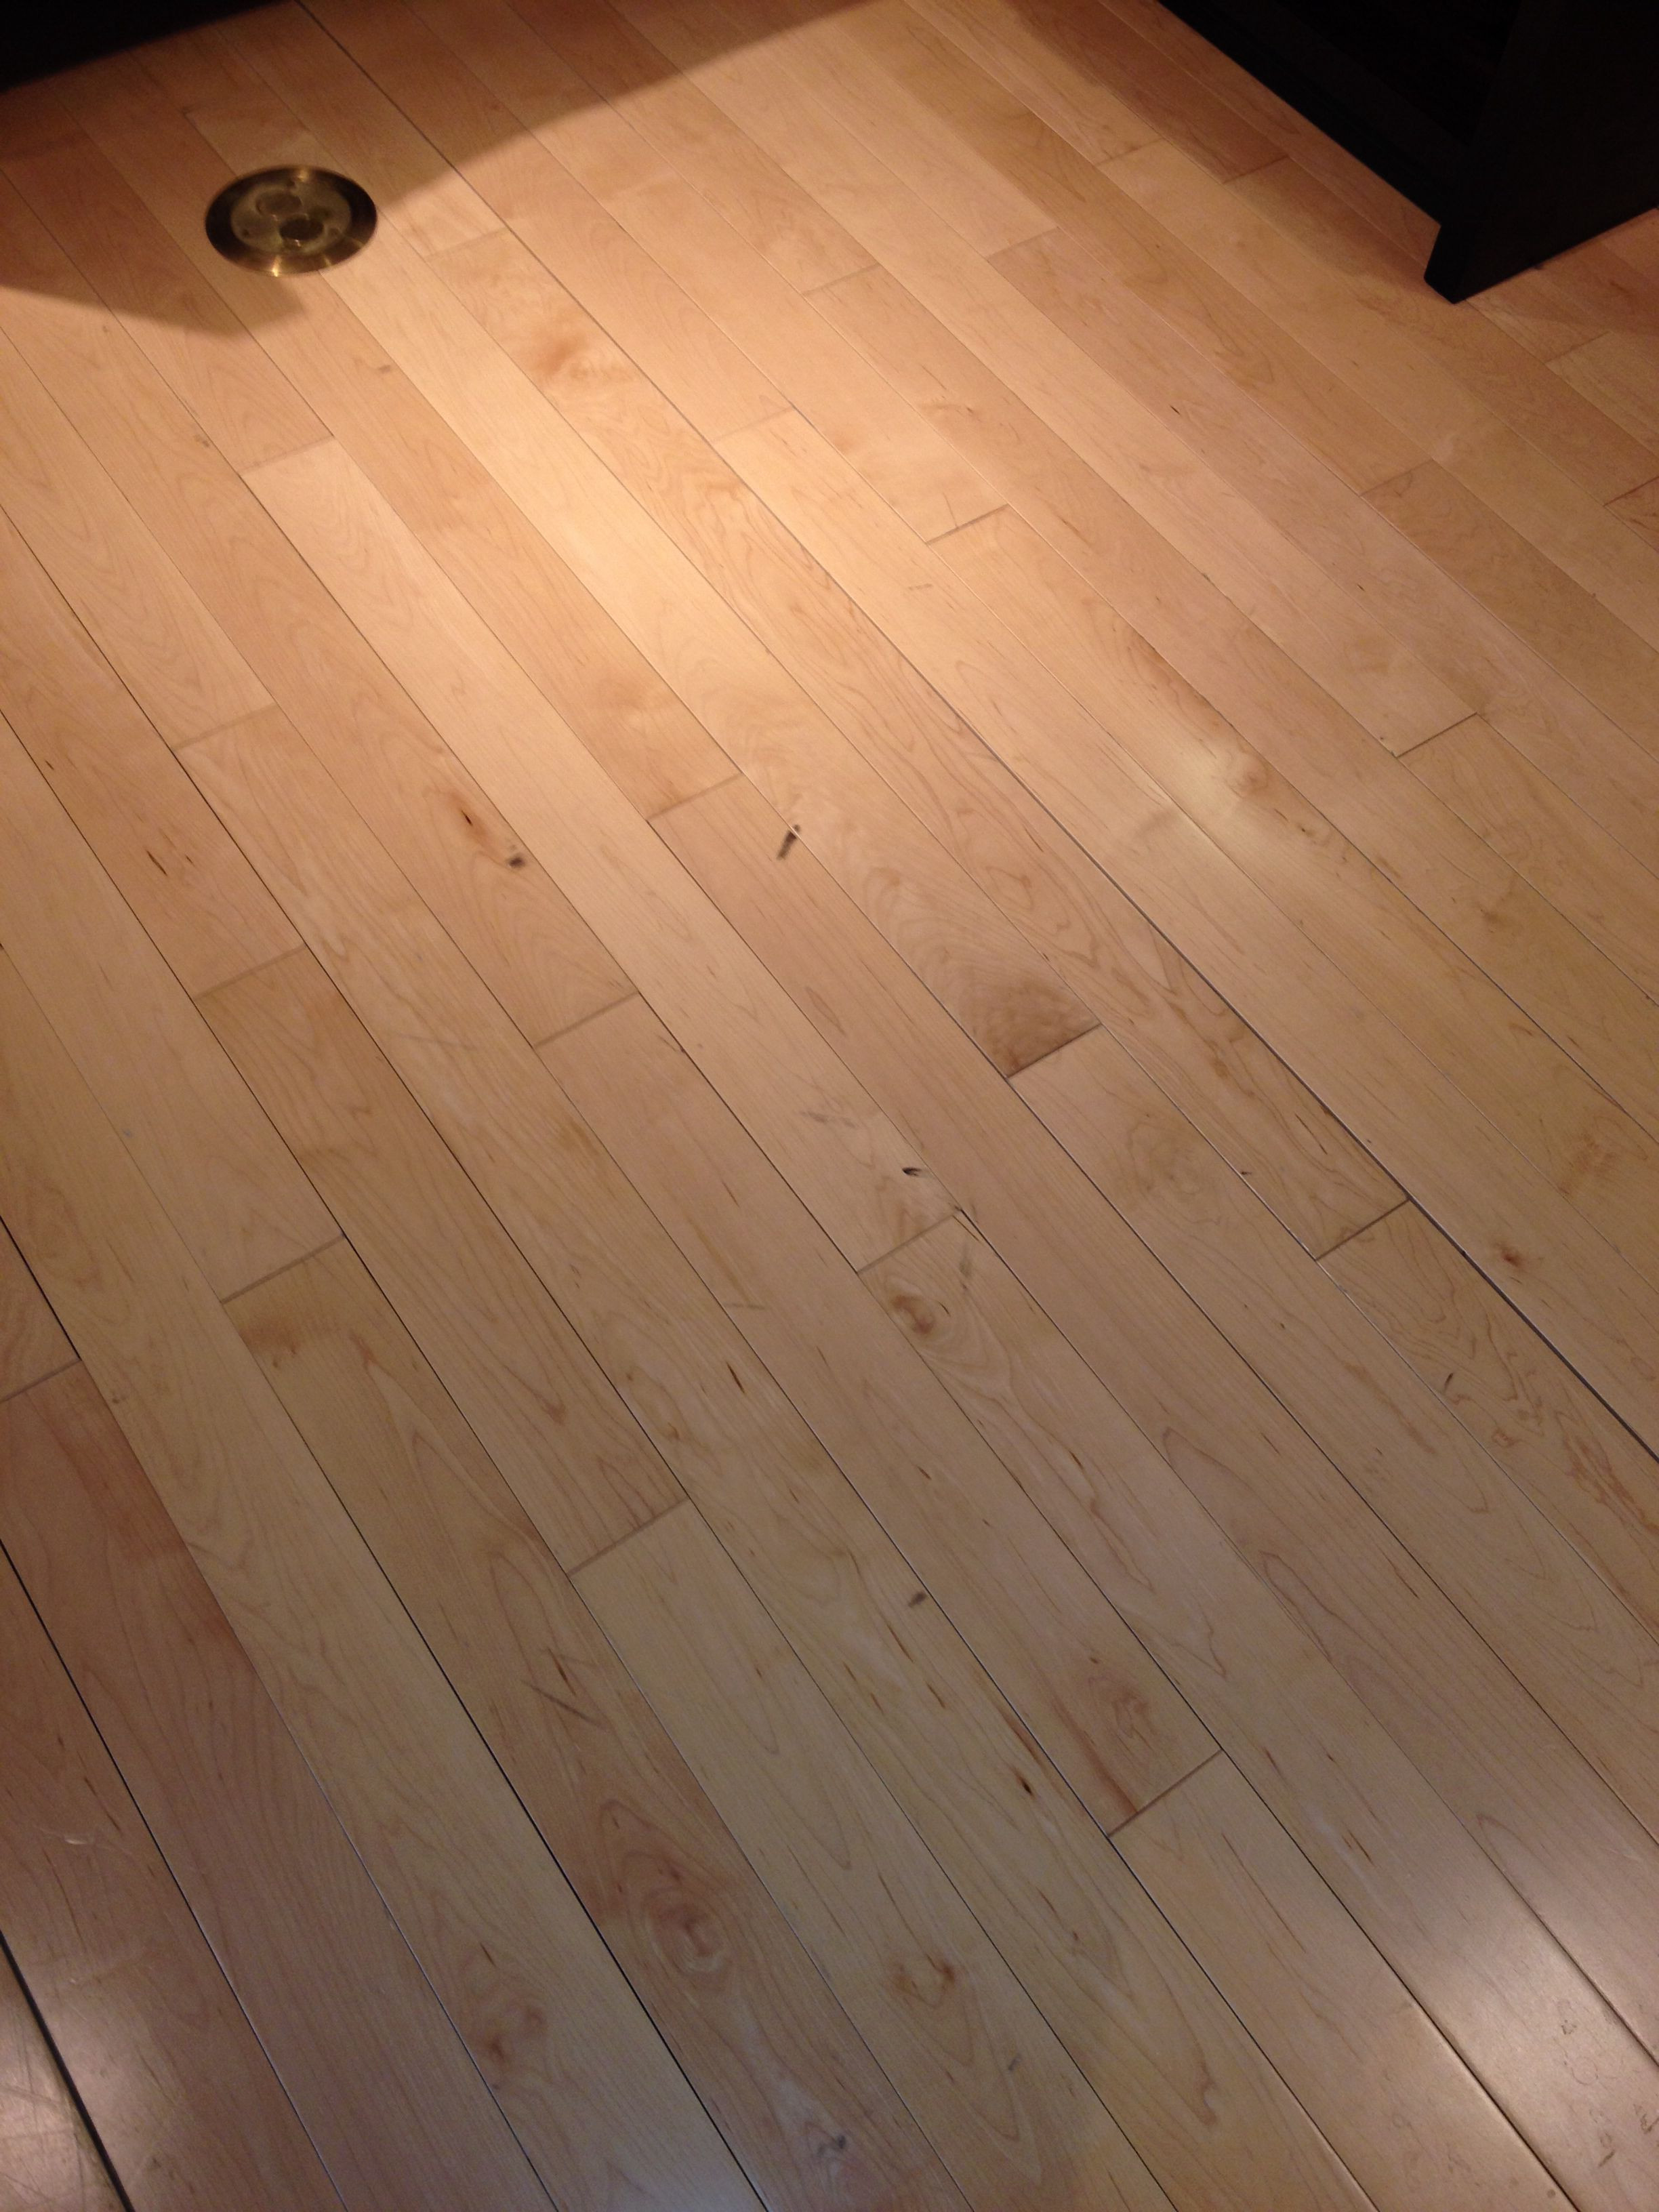 hardwood floor finishes colors of maple wood floors retail design sketch rendering pinterest regarding maple wood floors